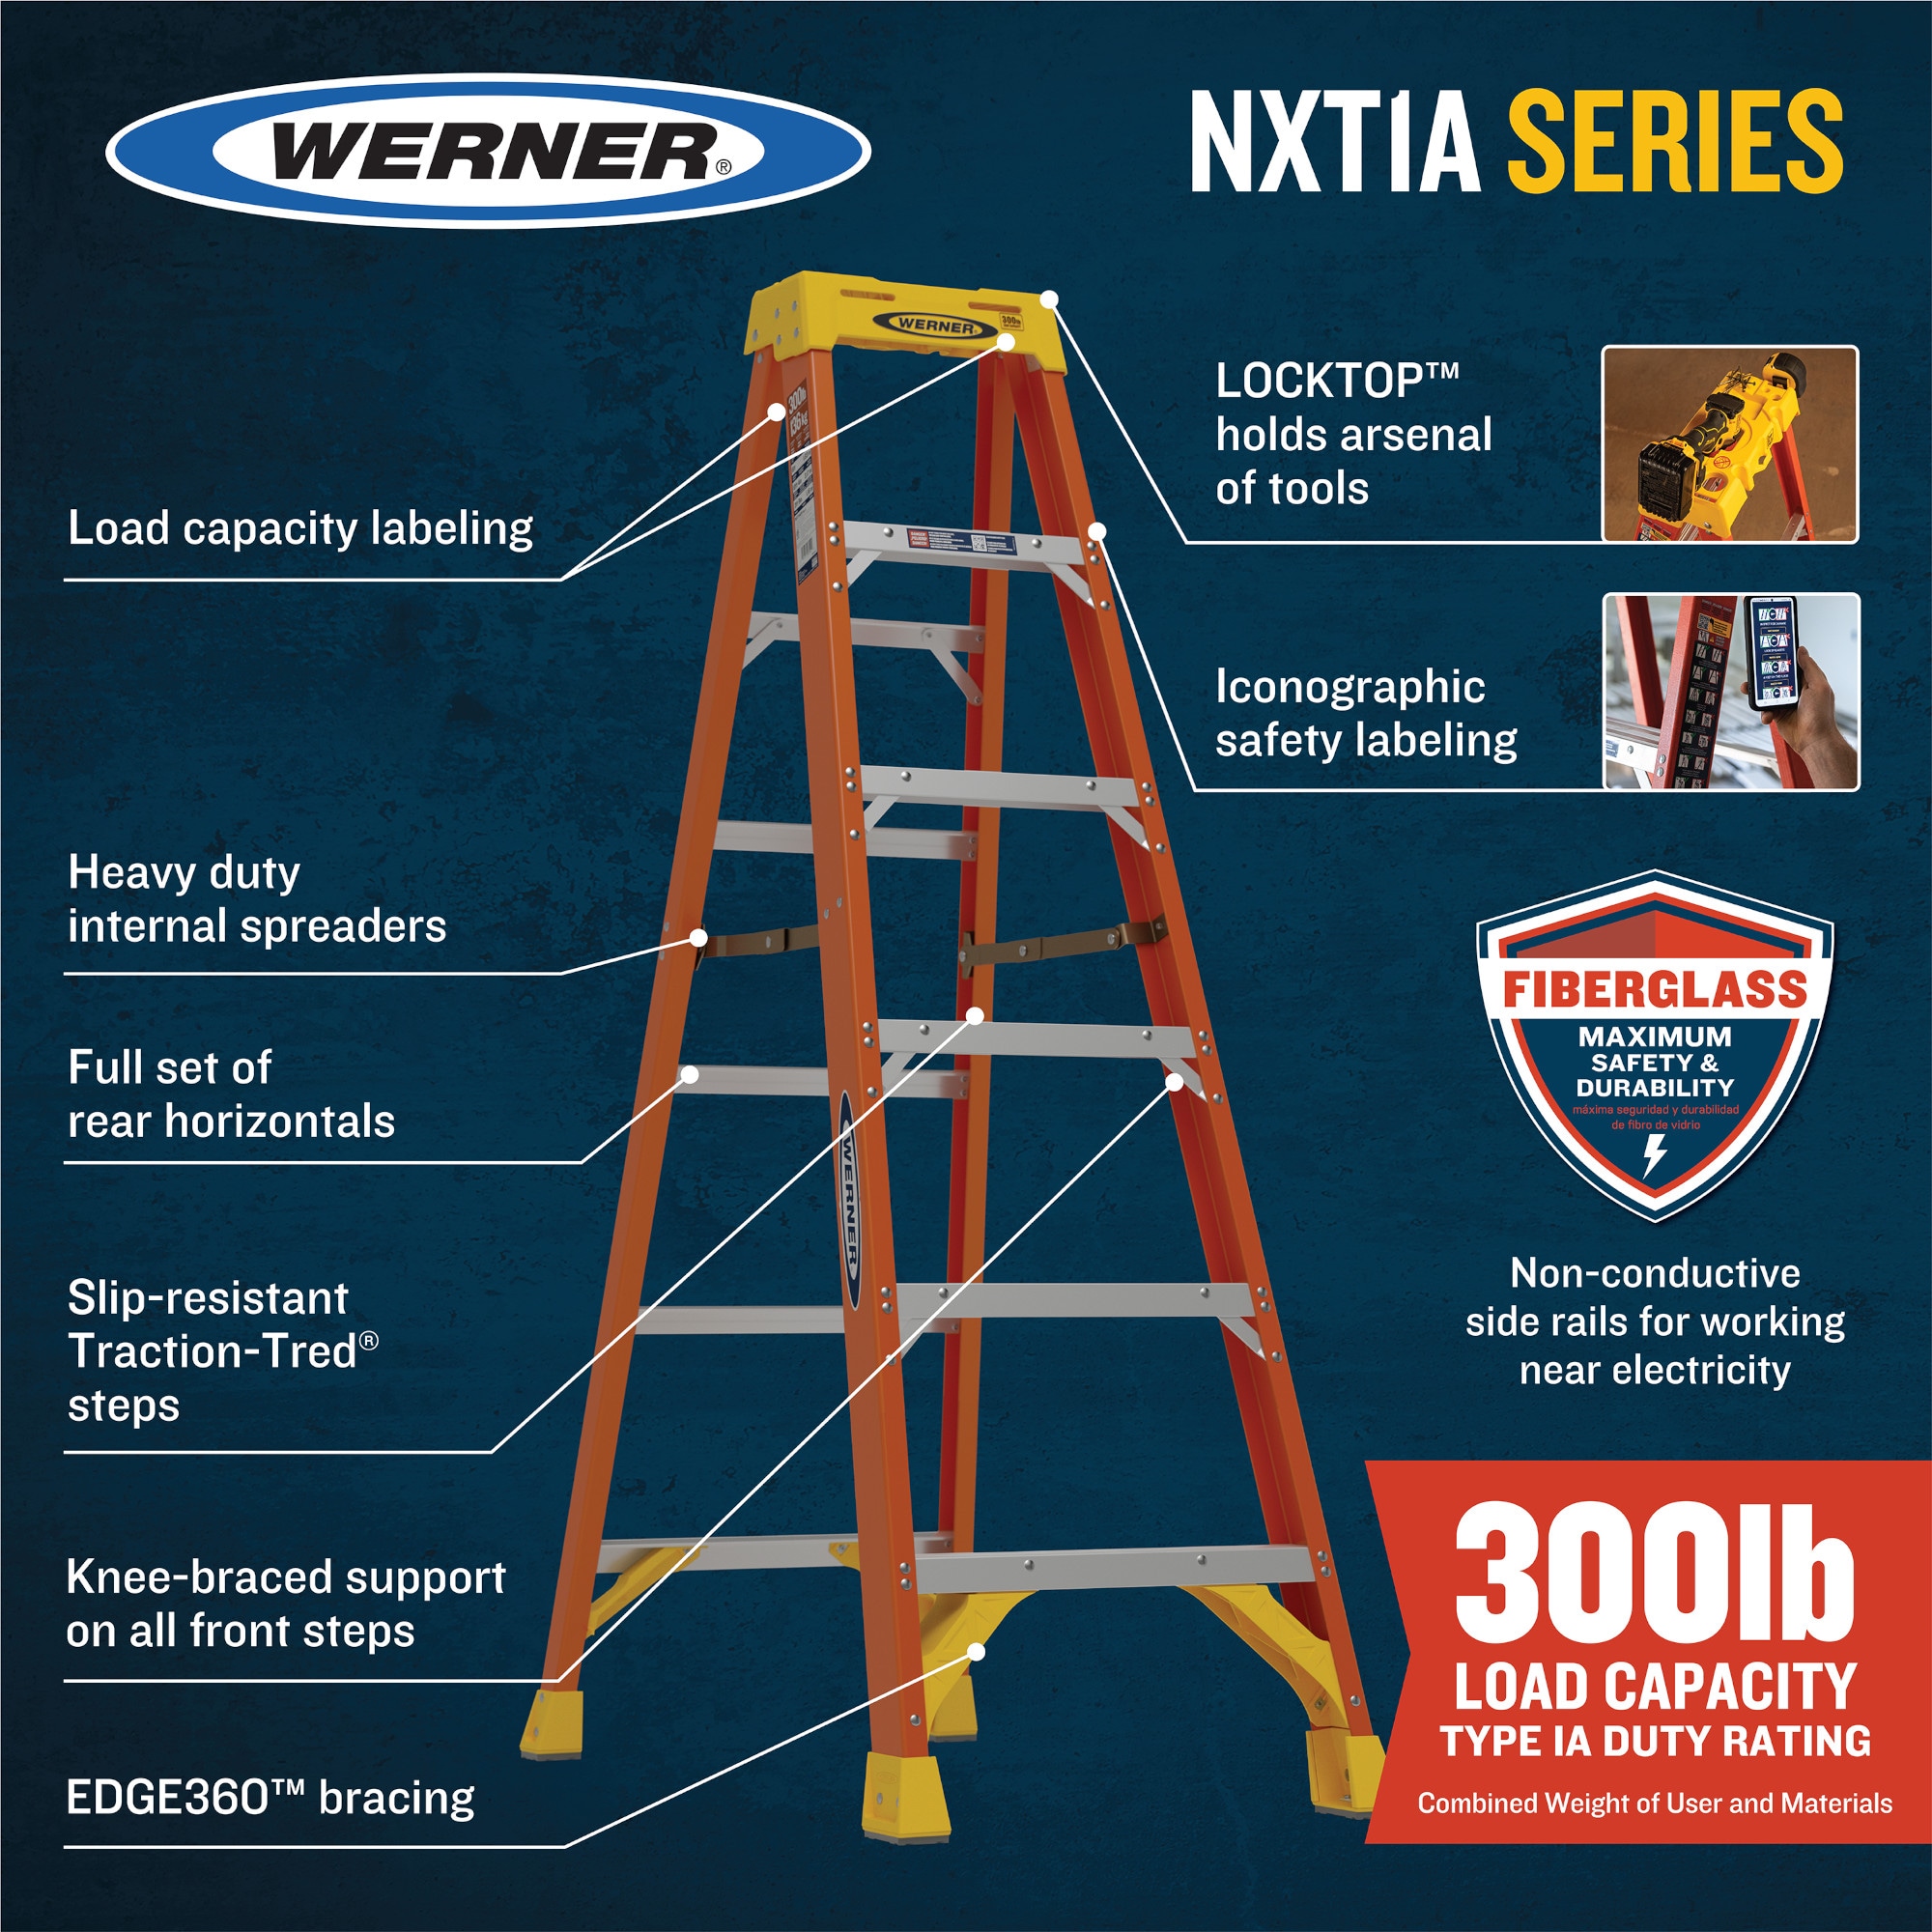 Louisville Ladder 225 lb Duty Rating Aluminum Step Ladder, 6ft